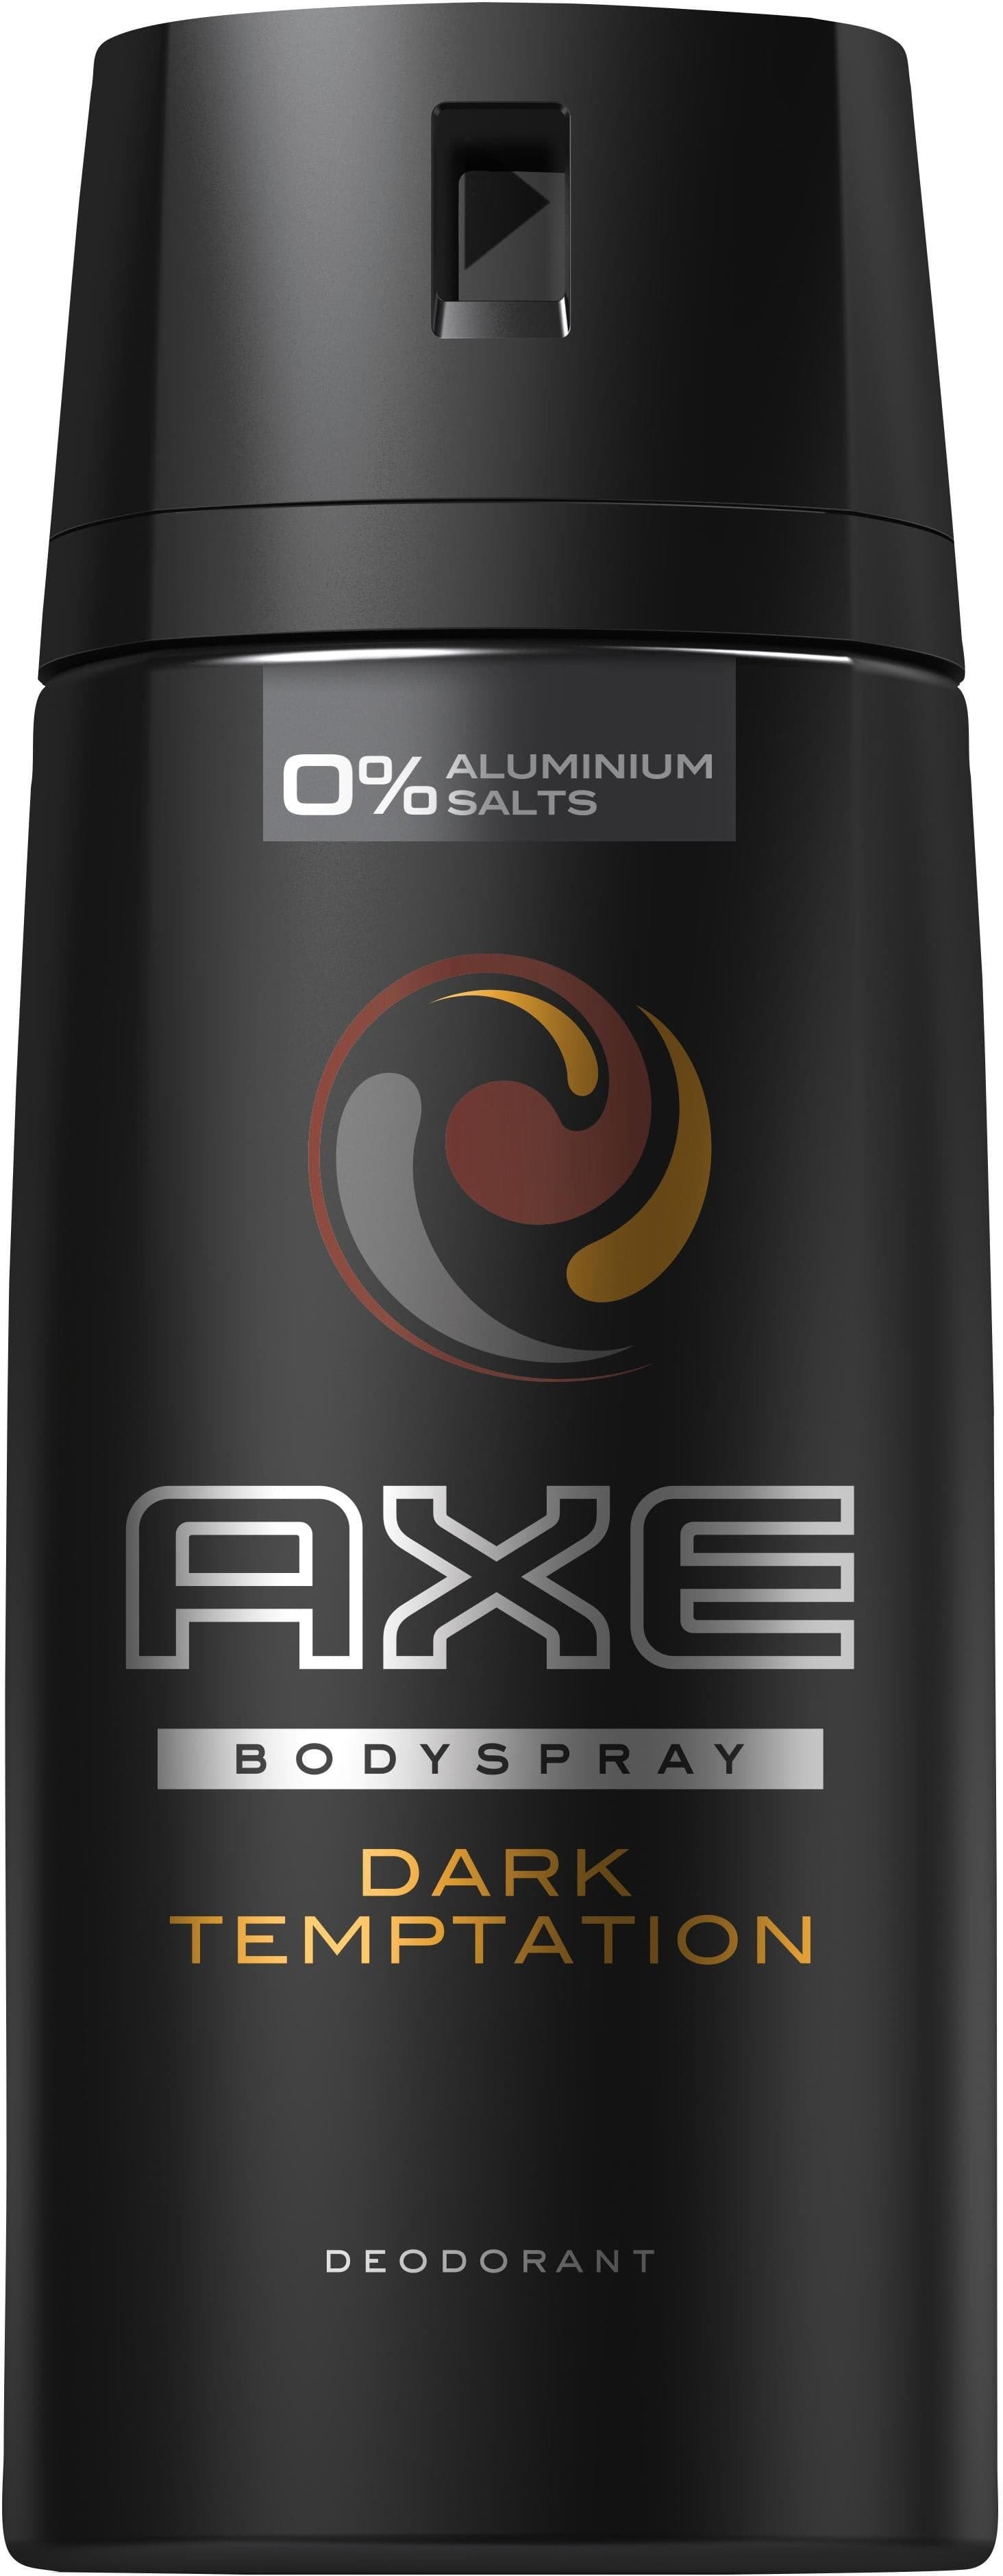 Dark Temptation Ax Bodyspray Deodorant 150ml